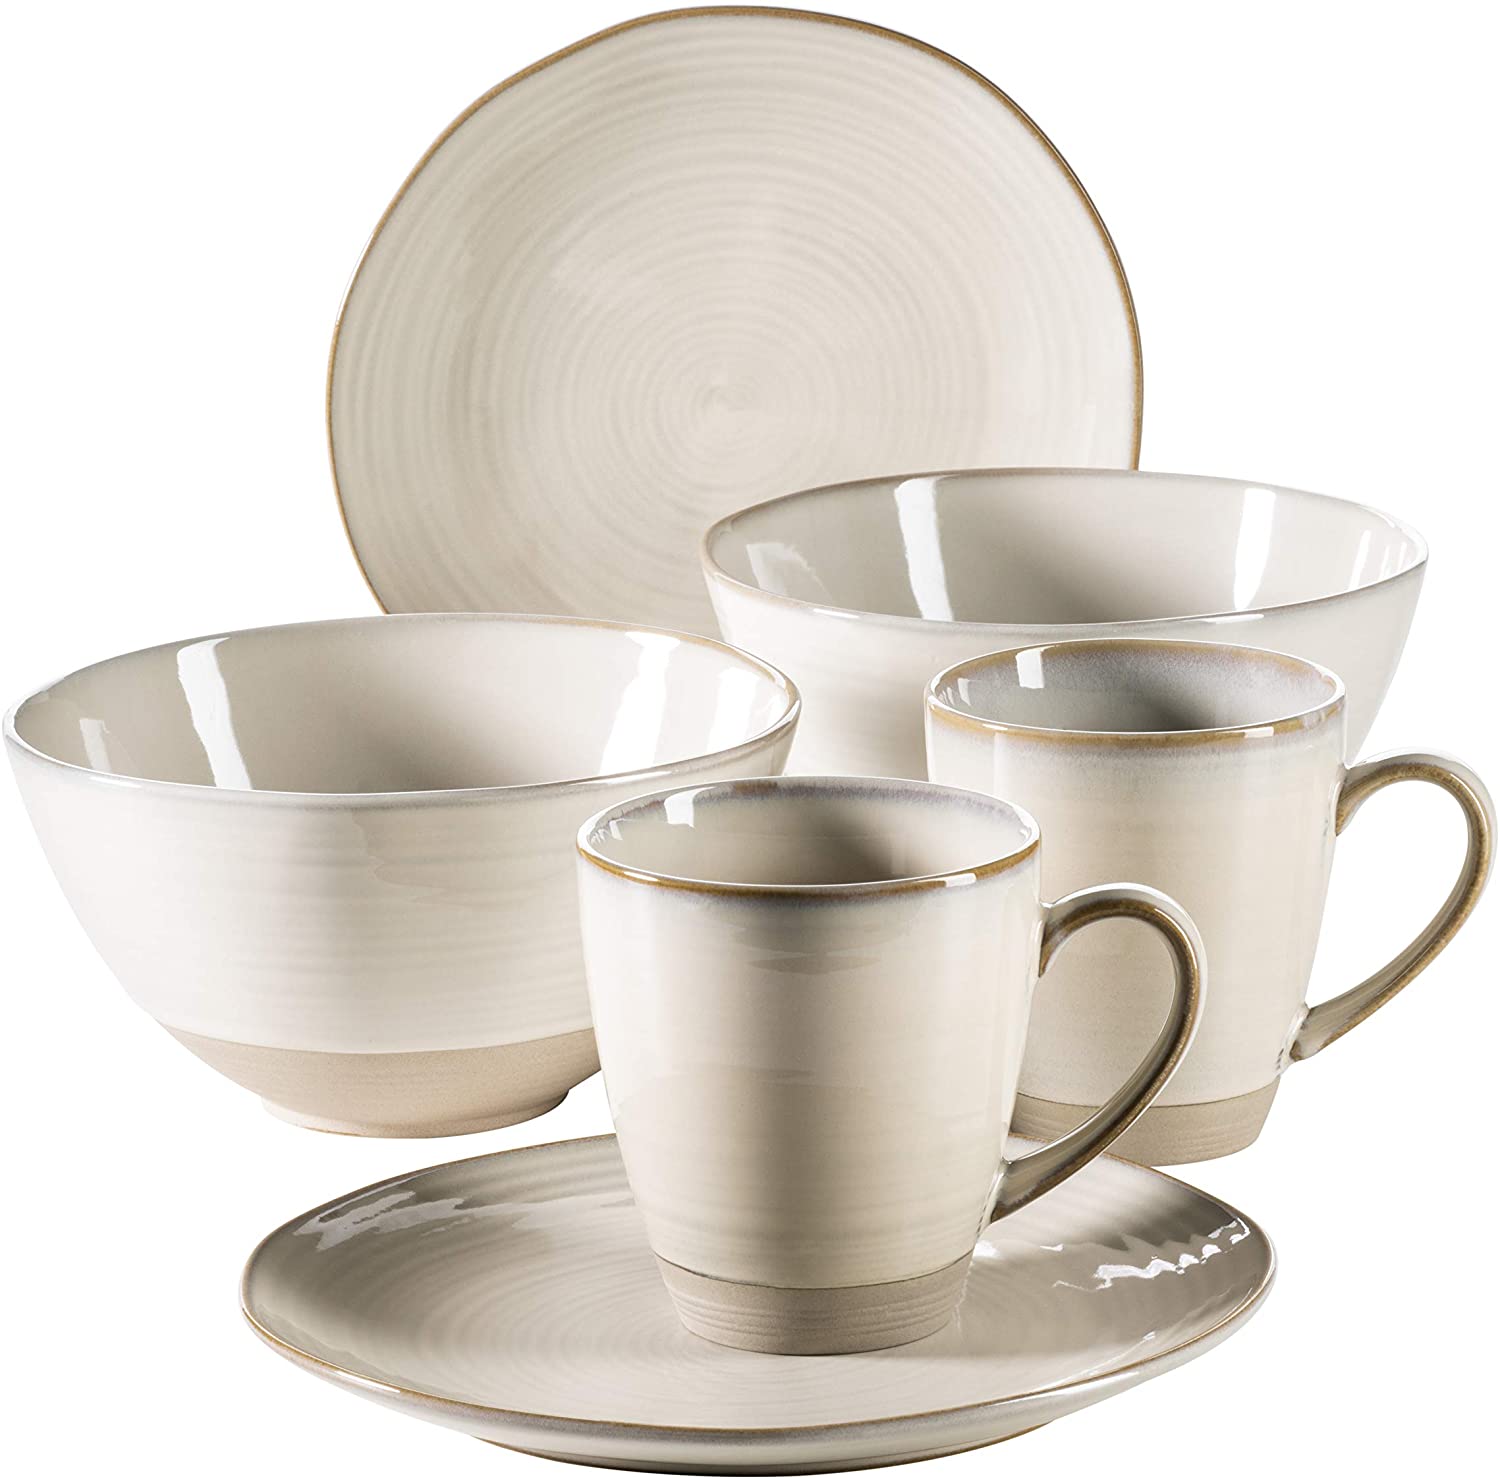 Mäser 931372 Nottingham Series Set of 3 Serving Plates in 3 Sizes, Vintage Look, Beige Stoneware